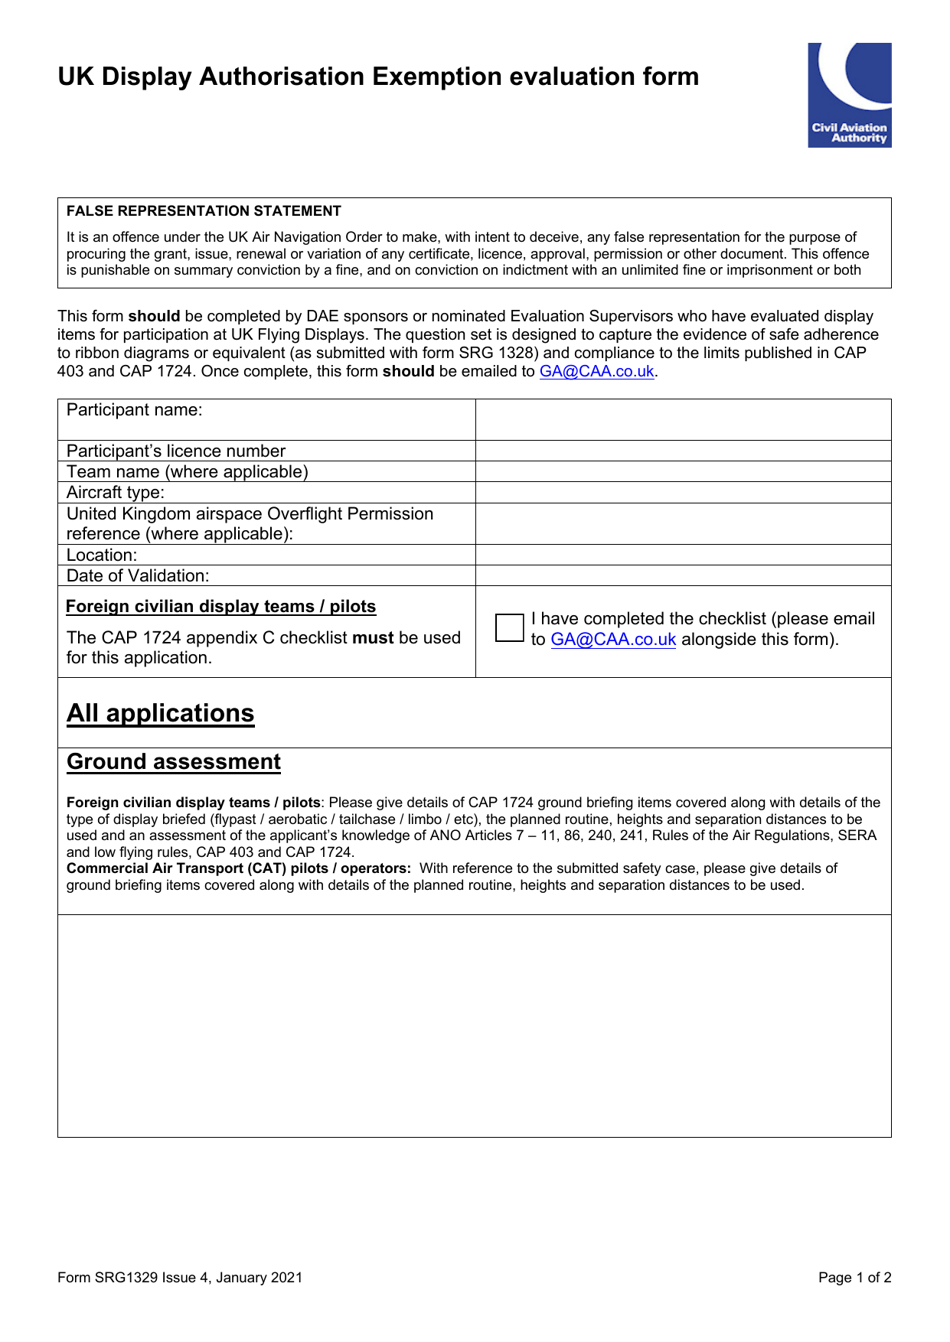 Form SRG1329 UK Display Authorisation Exemption Evaluation Form - United Kingdom, Page 1